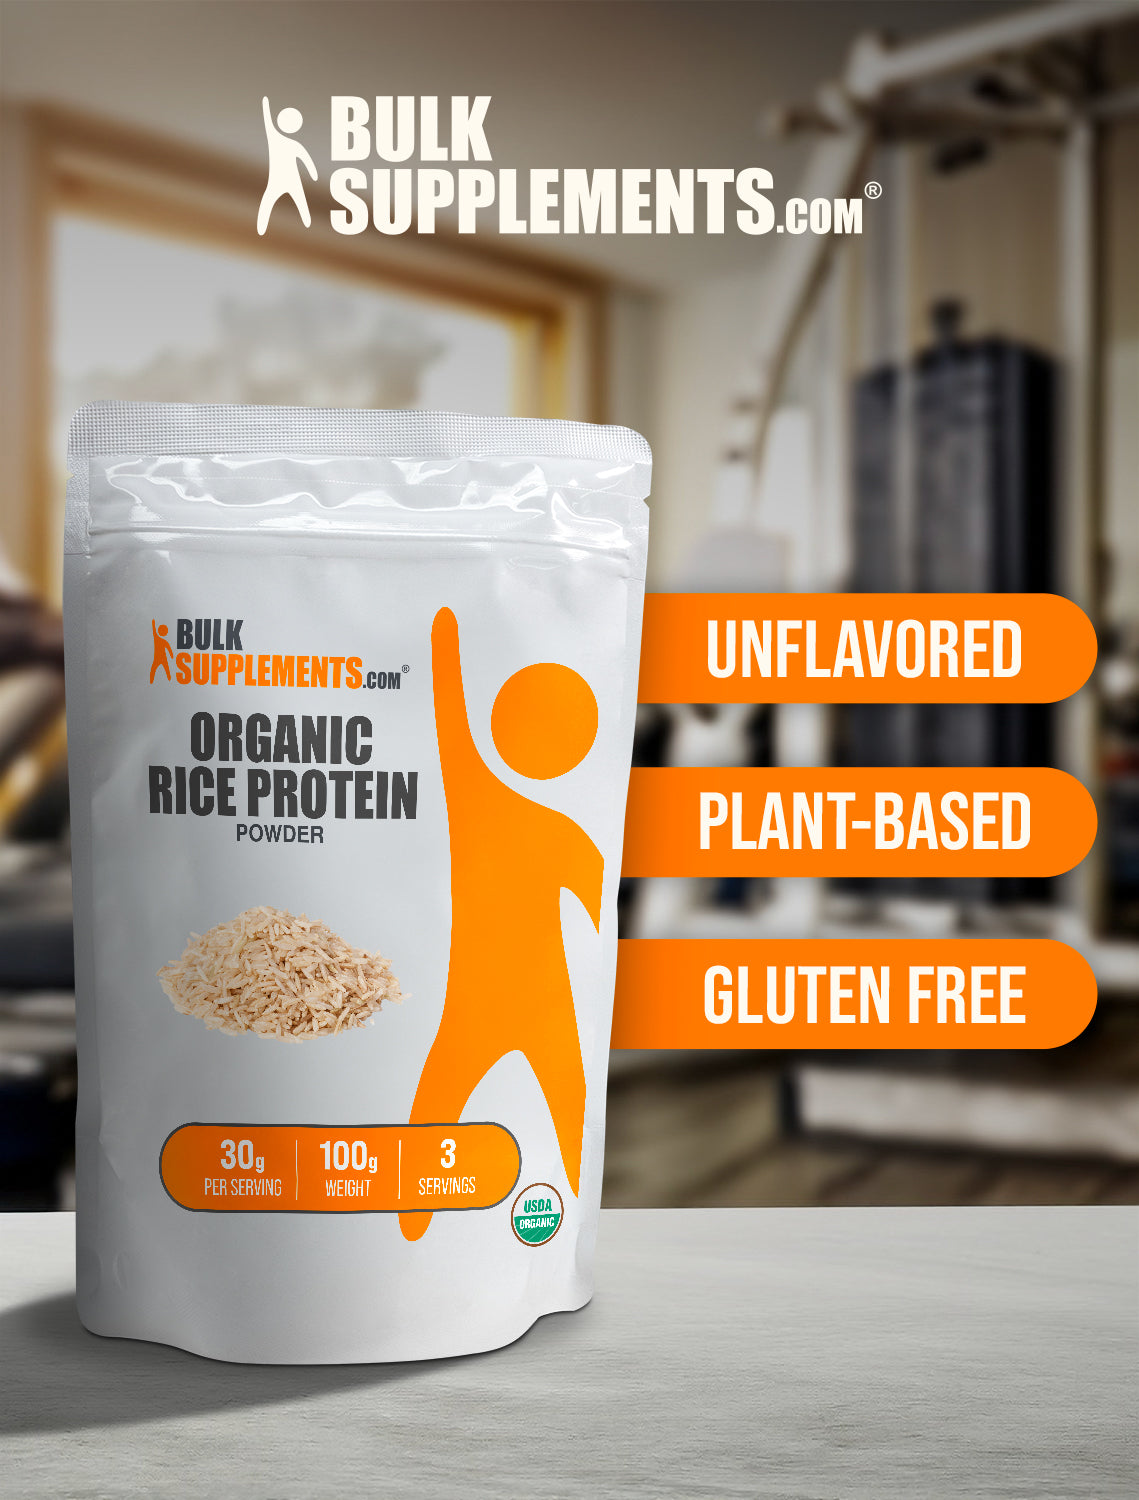 Organic Rice Protein Powder keyword image 100g